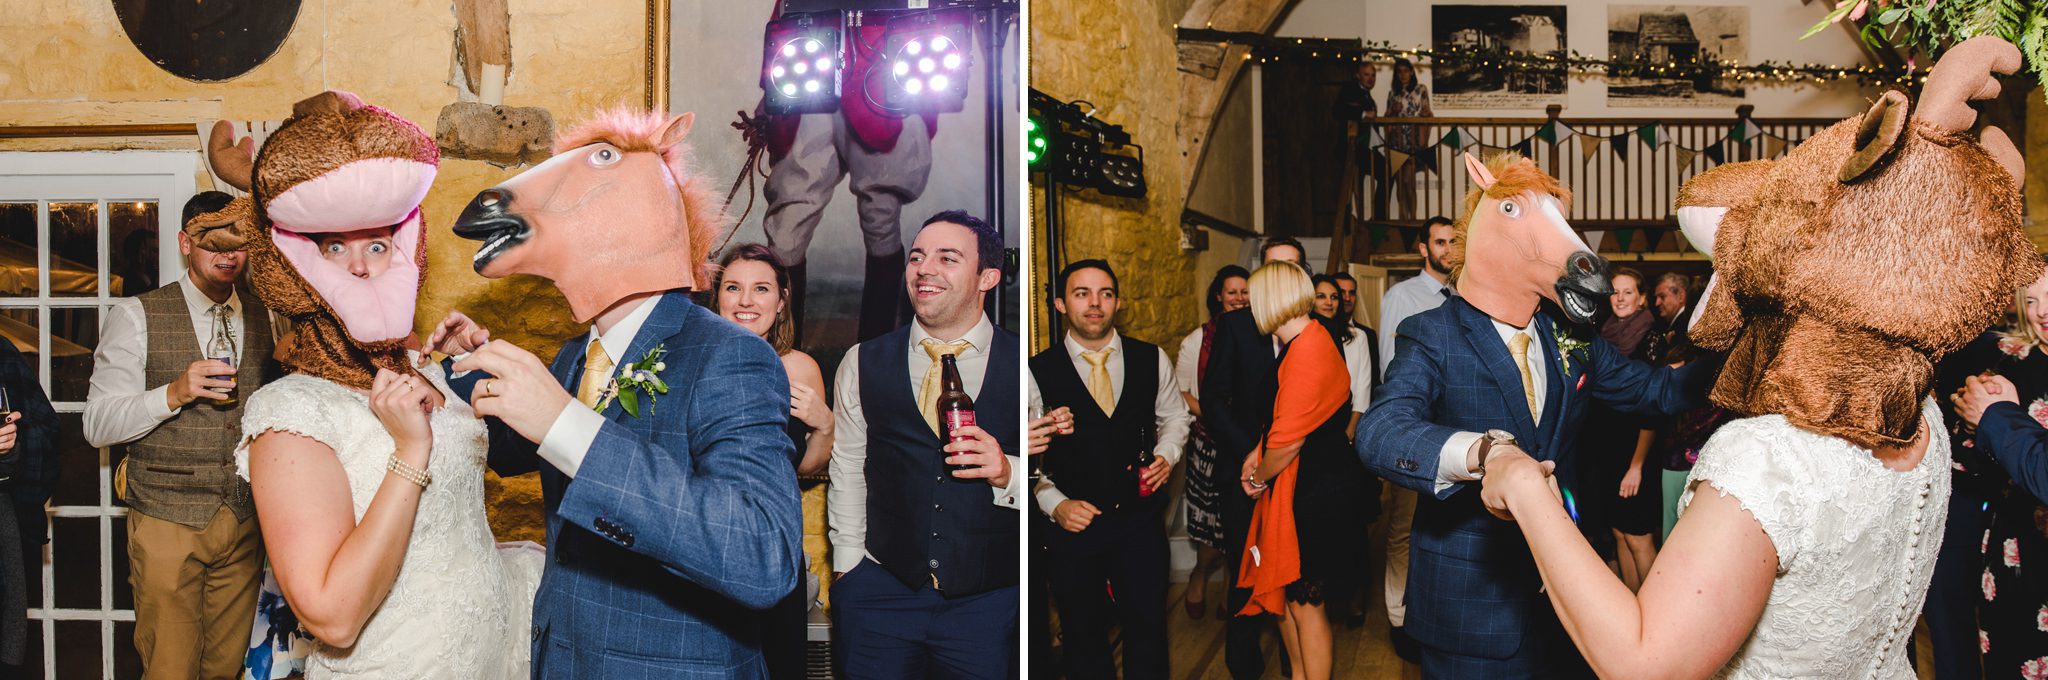 Wedding guests dancing at Owlpen Manor